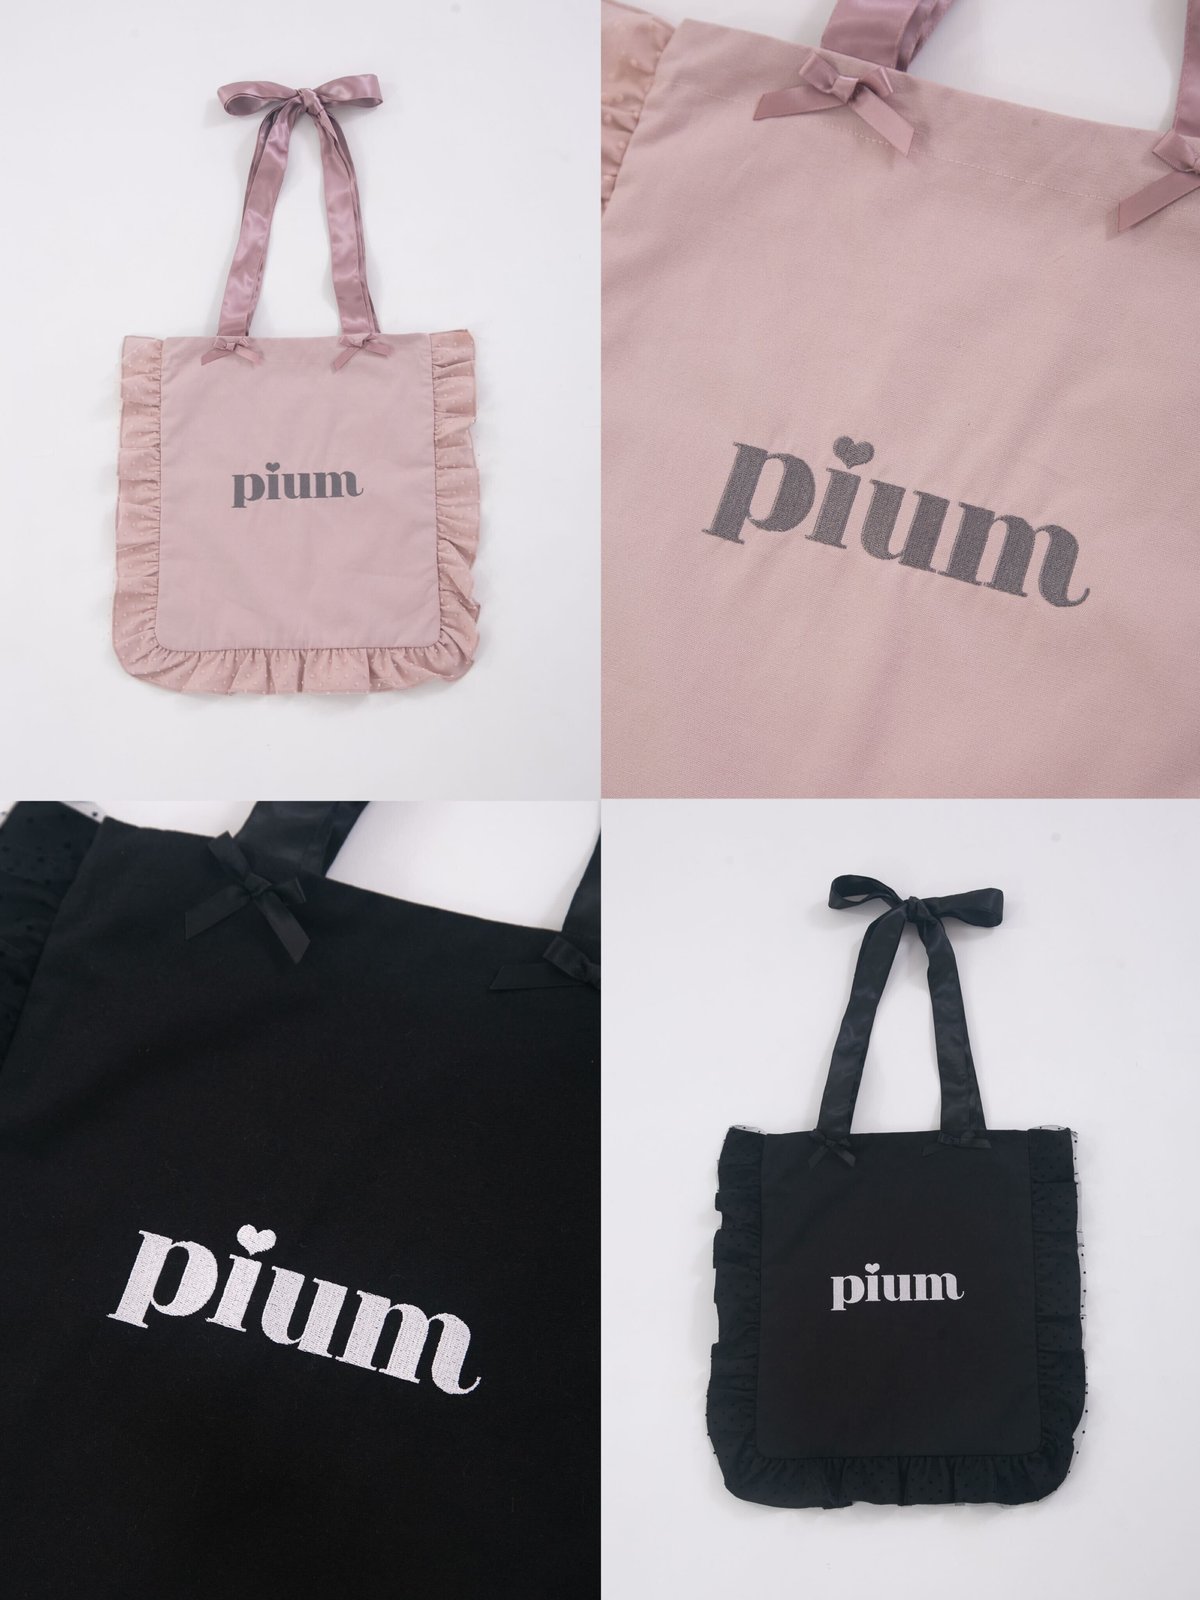 piumロゴリボントートバッグ | pium